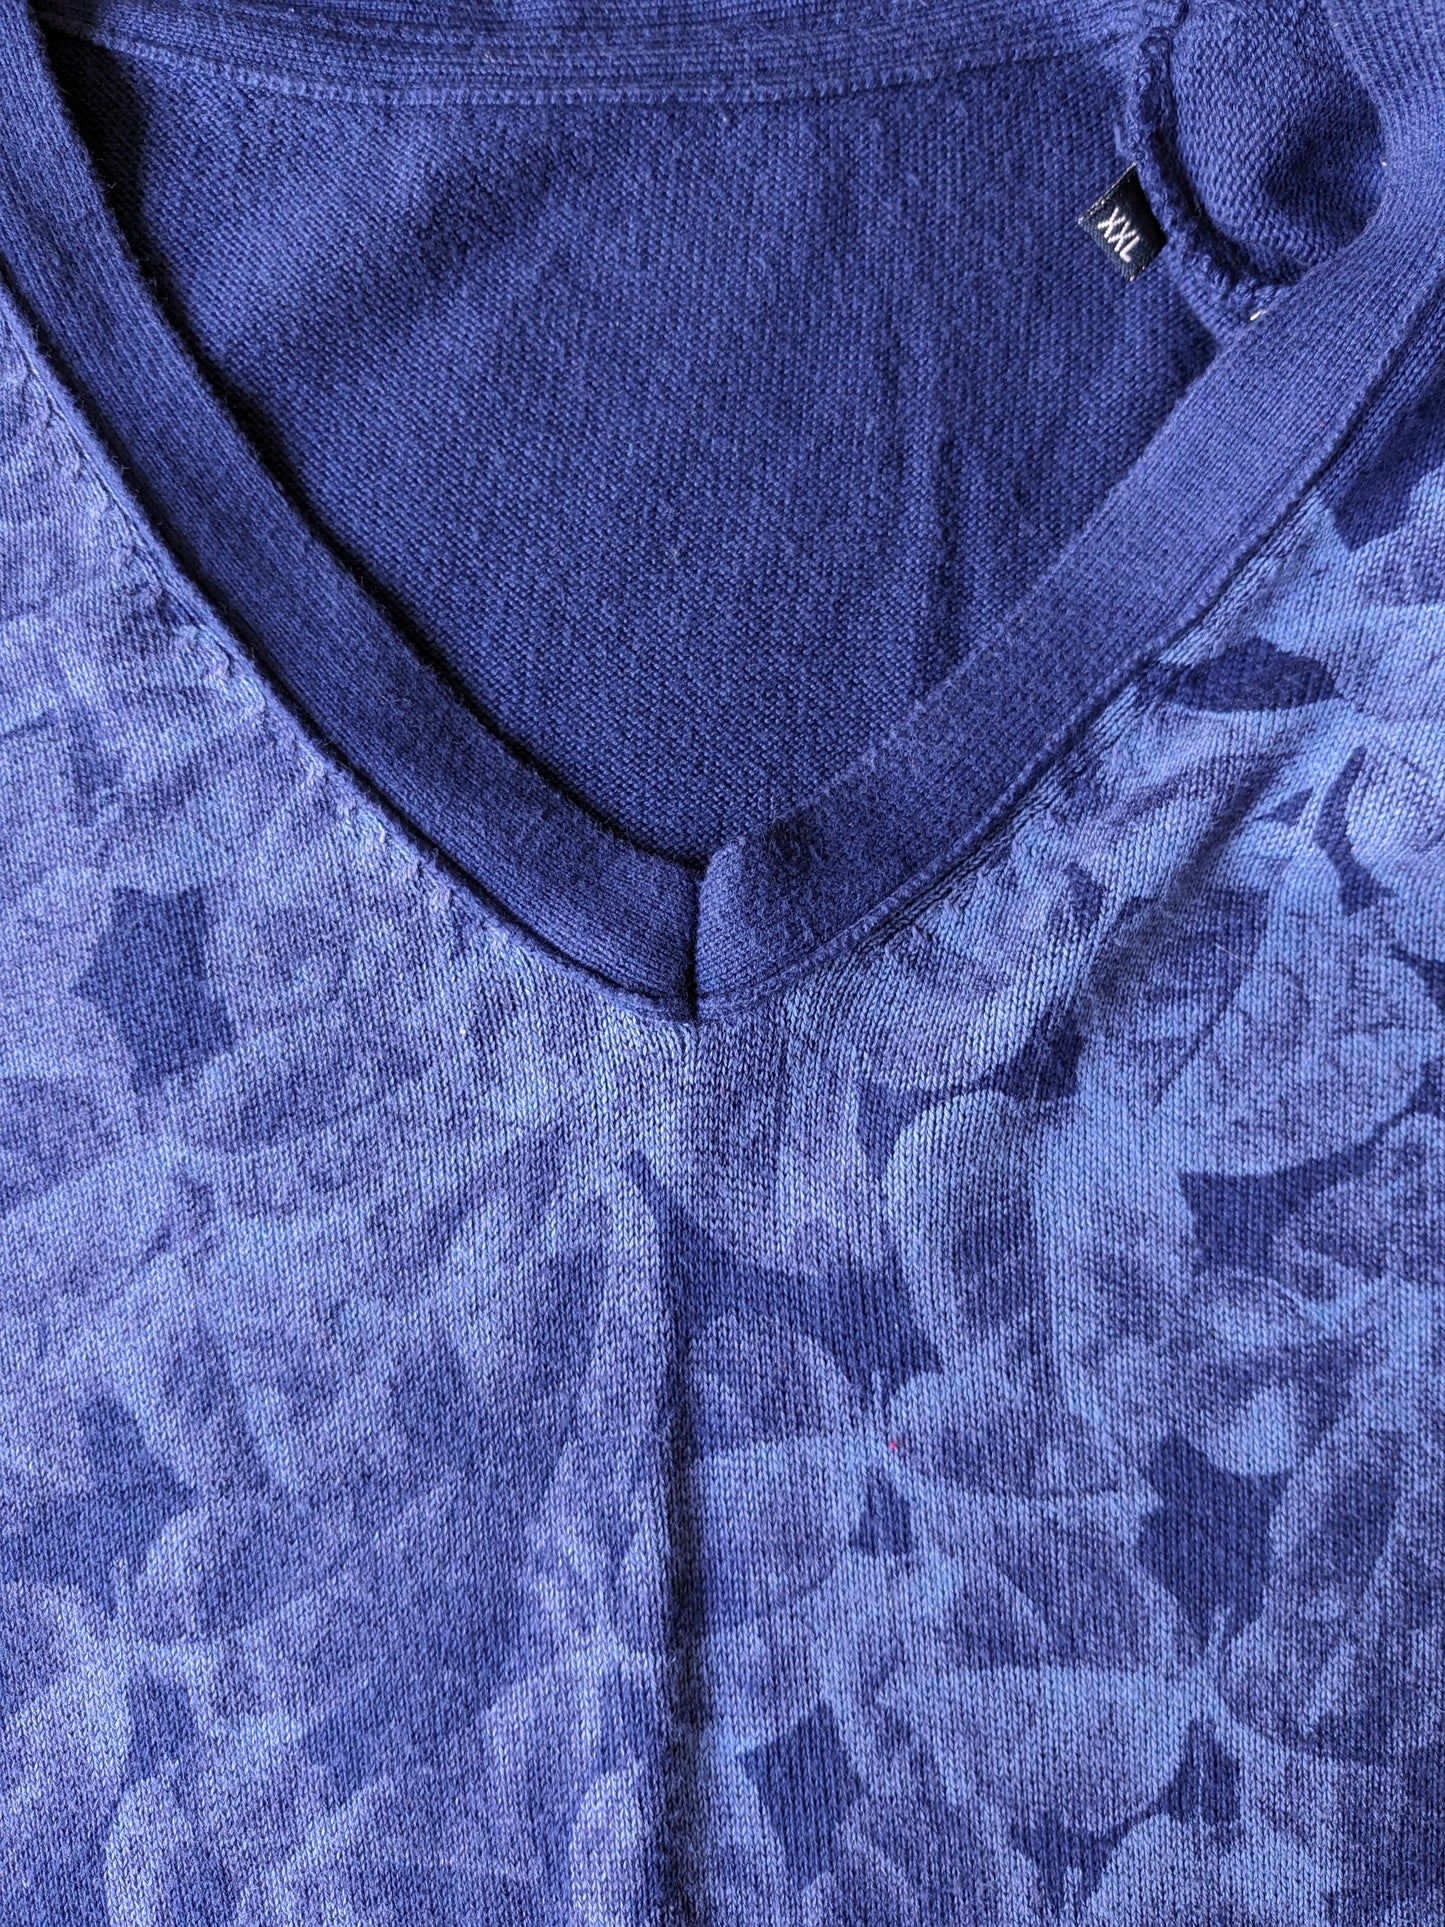 Brandless sweater. Blue leaf motif. Size XXL / 2XL.